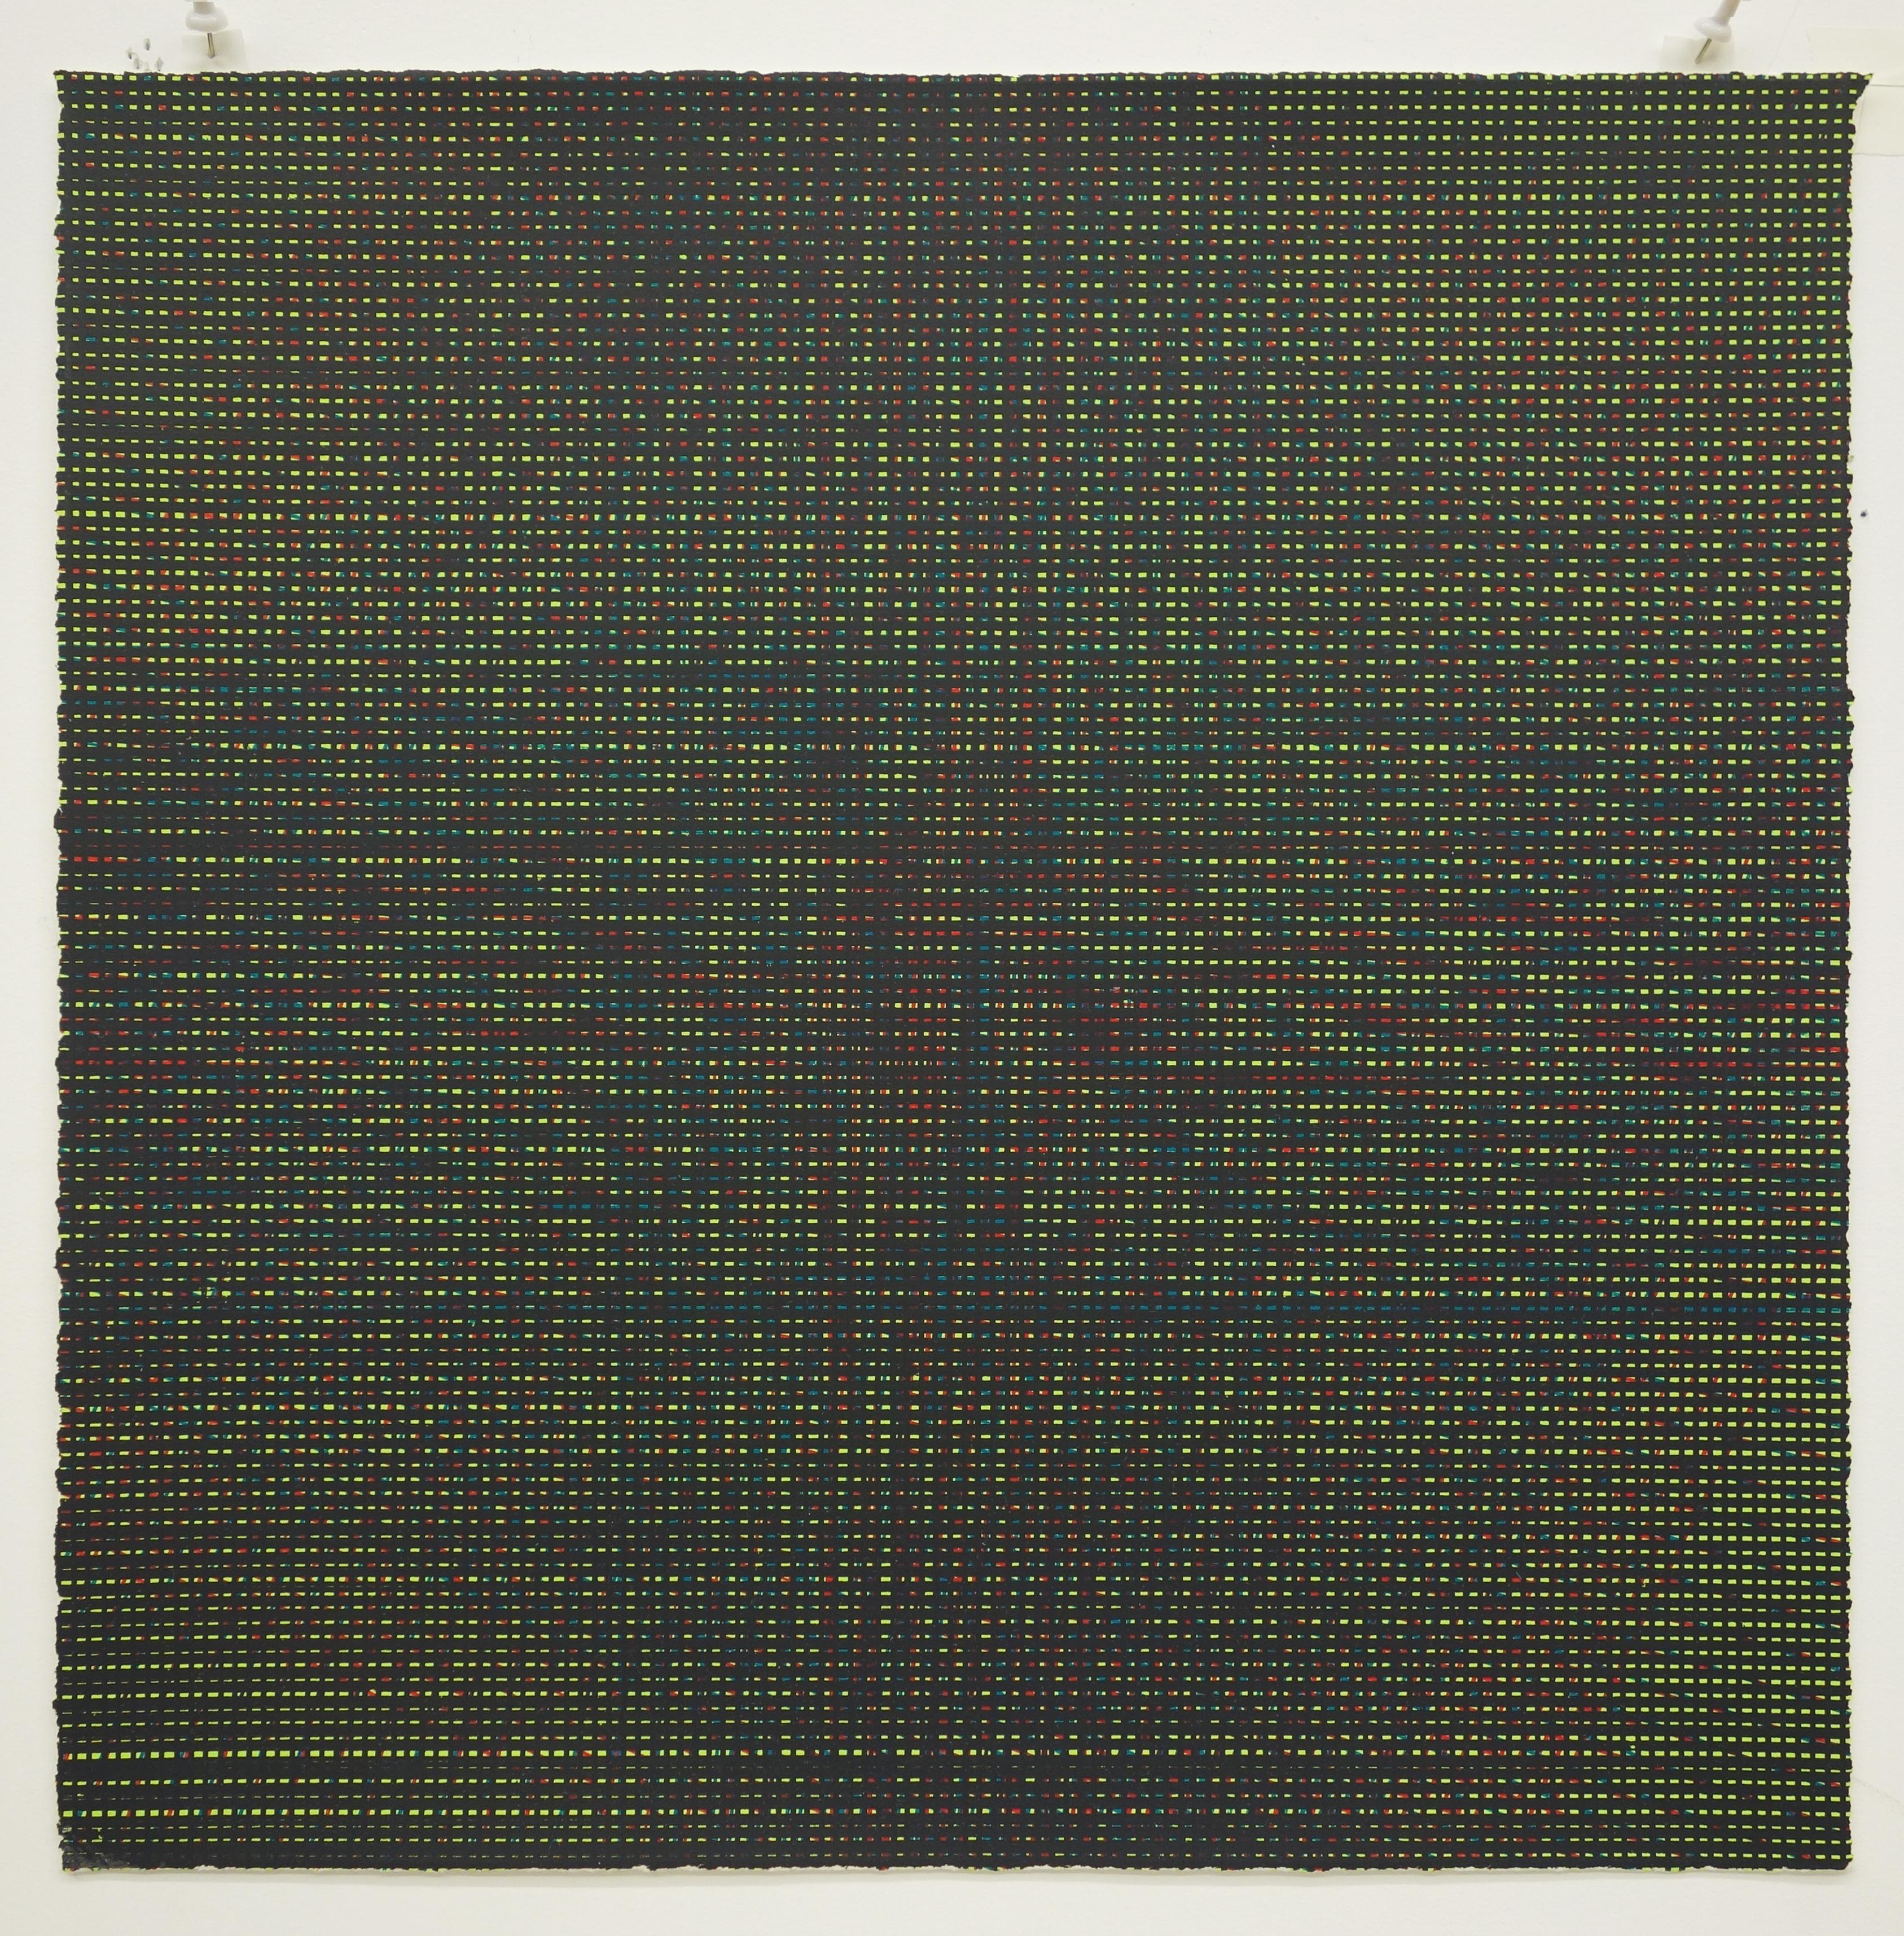 Rob de Oude, Untitled-Wassaic 8, 2016, silkscreen, 18 x 18 inches, Suite of 10 2